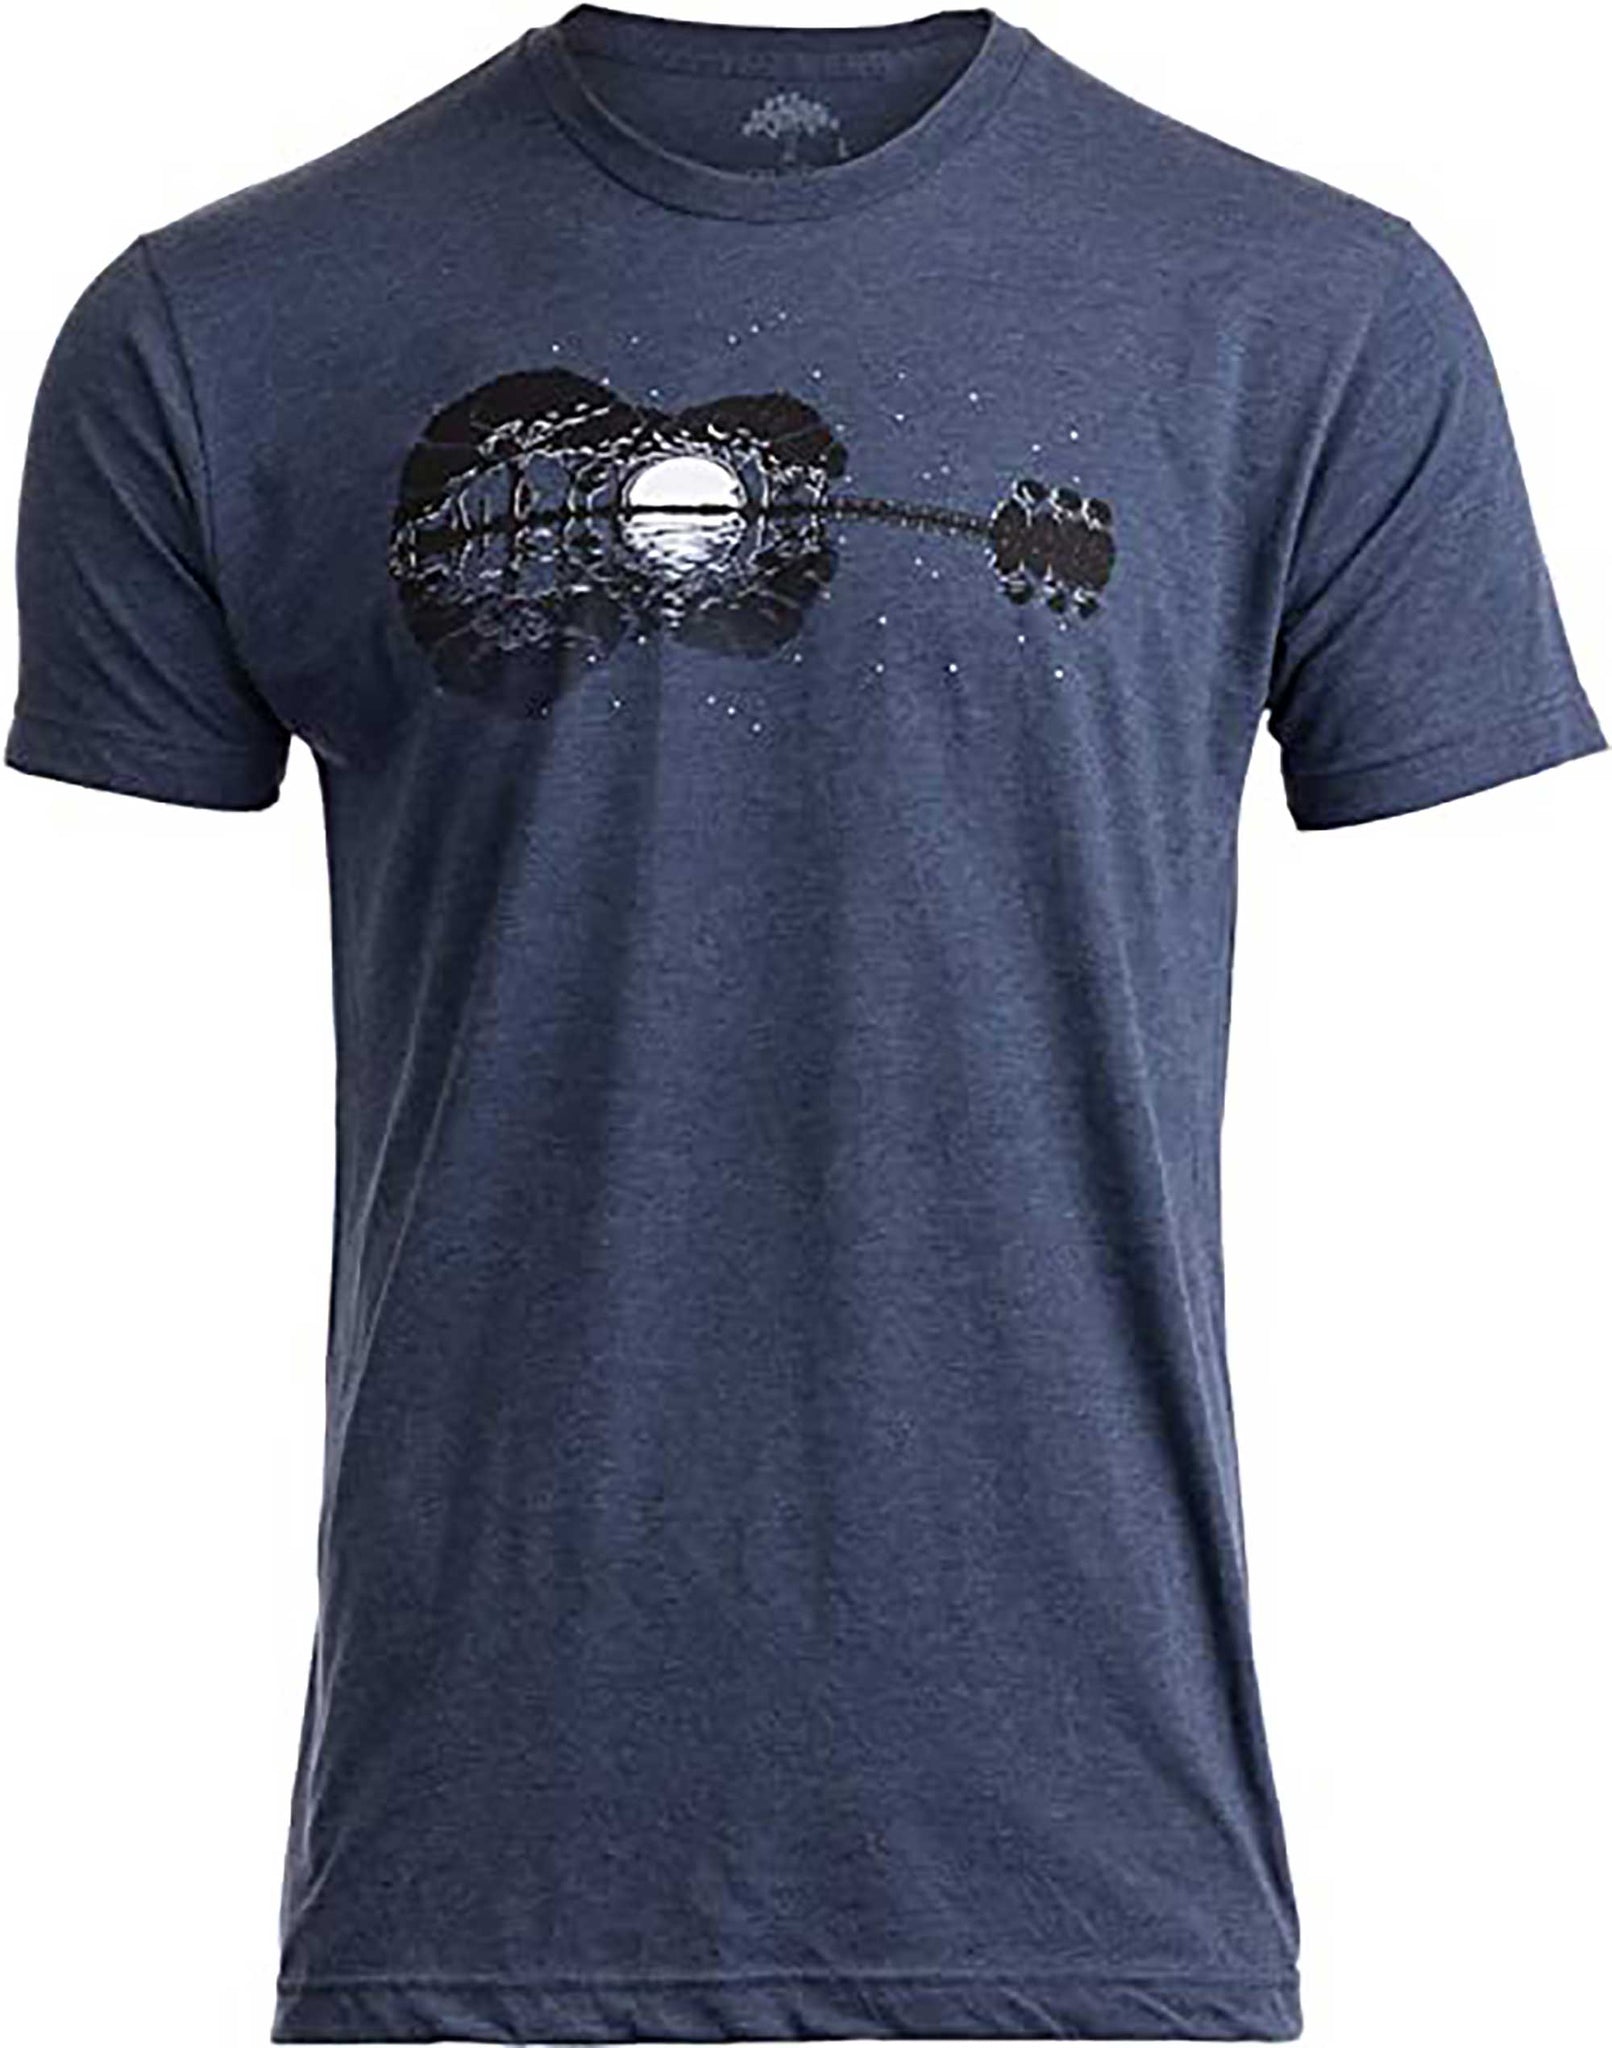 Skitongift Acoustic Guitar Player Tee, Guitarist Music Nature Shirt, Musician Graphic T Shirt for Men Women